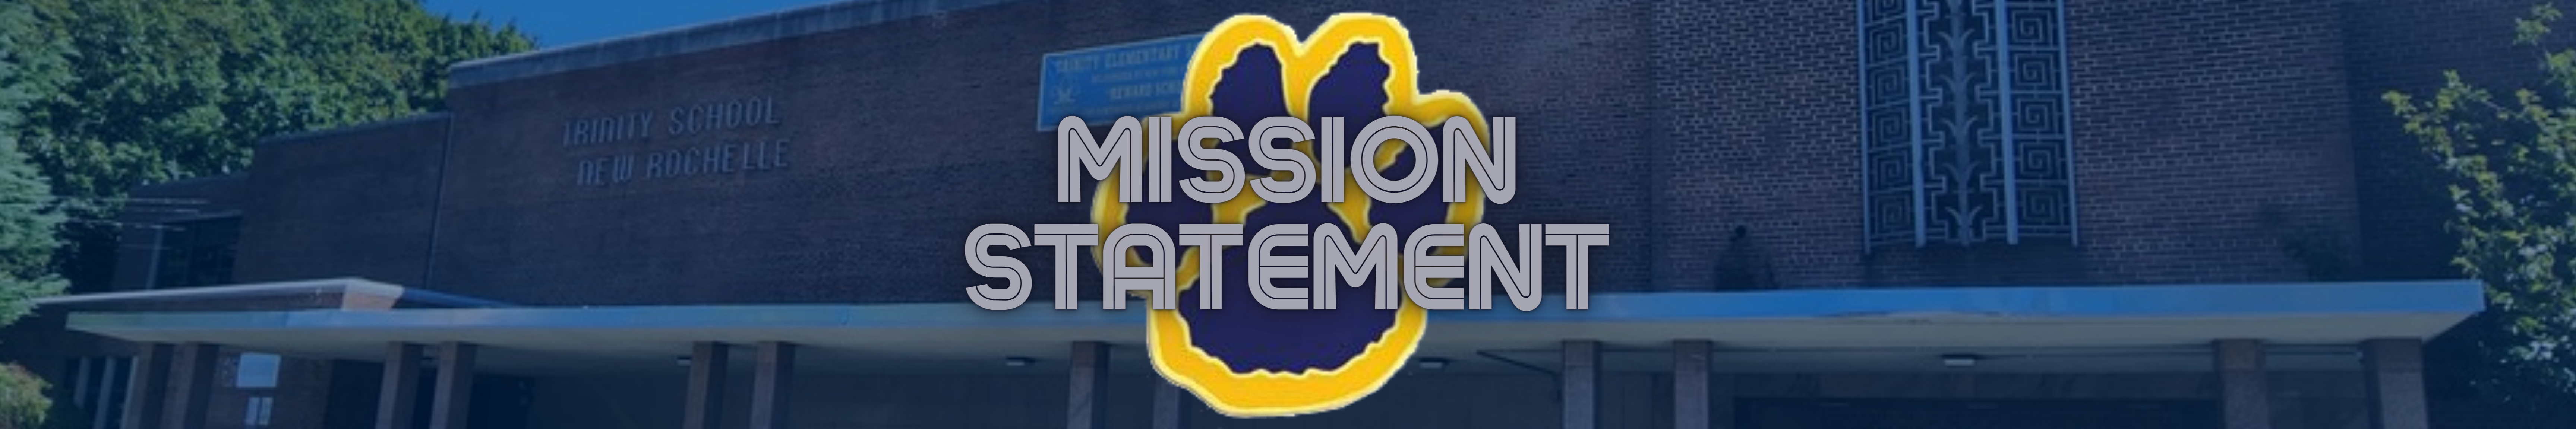 Mission/Vision Statement banner